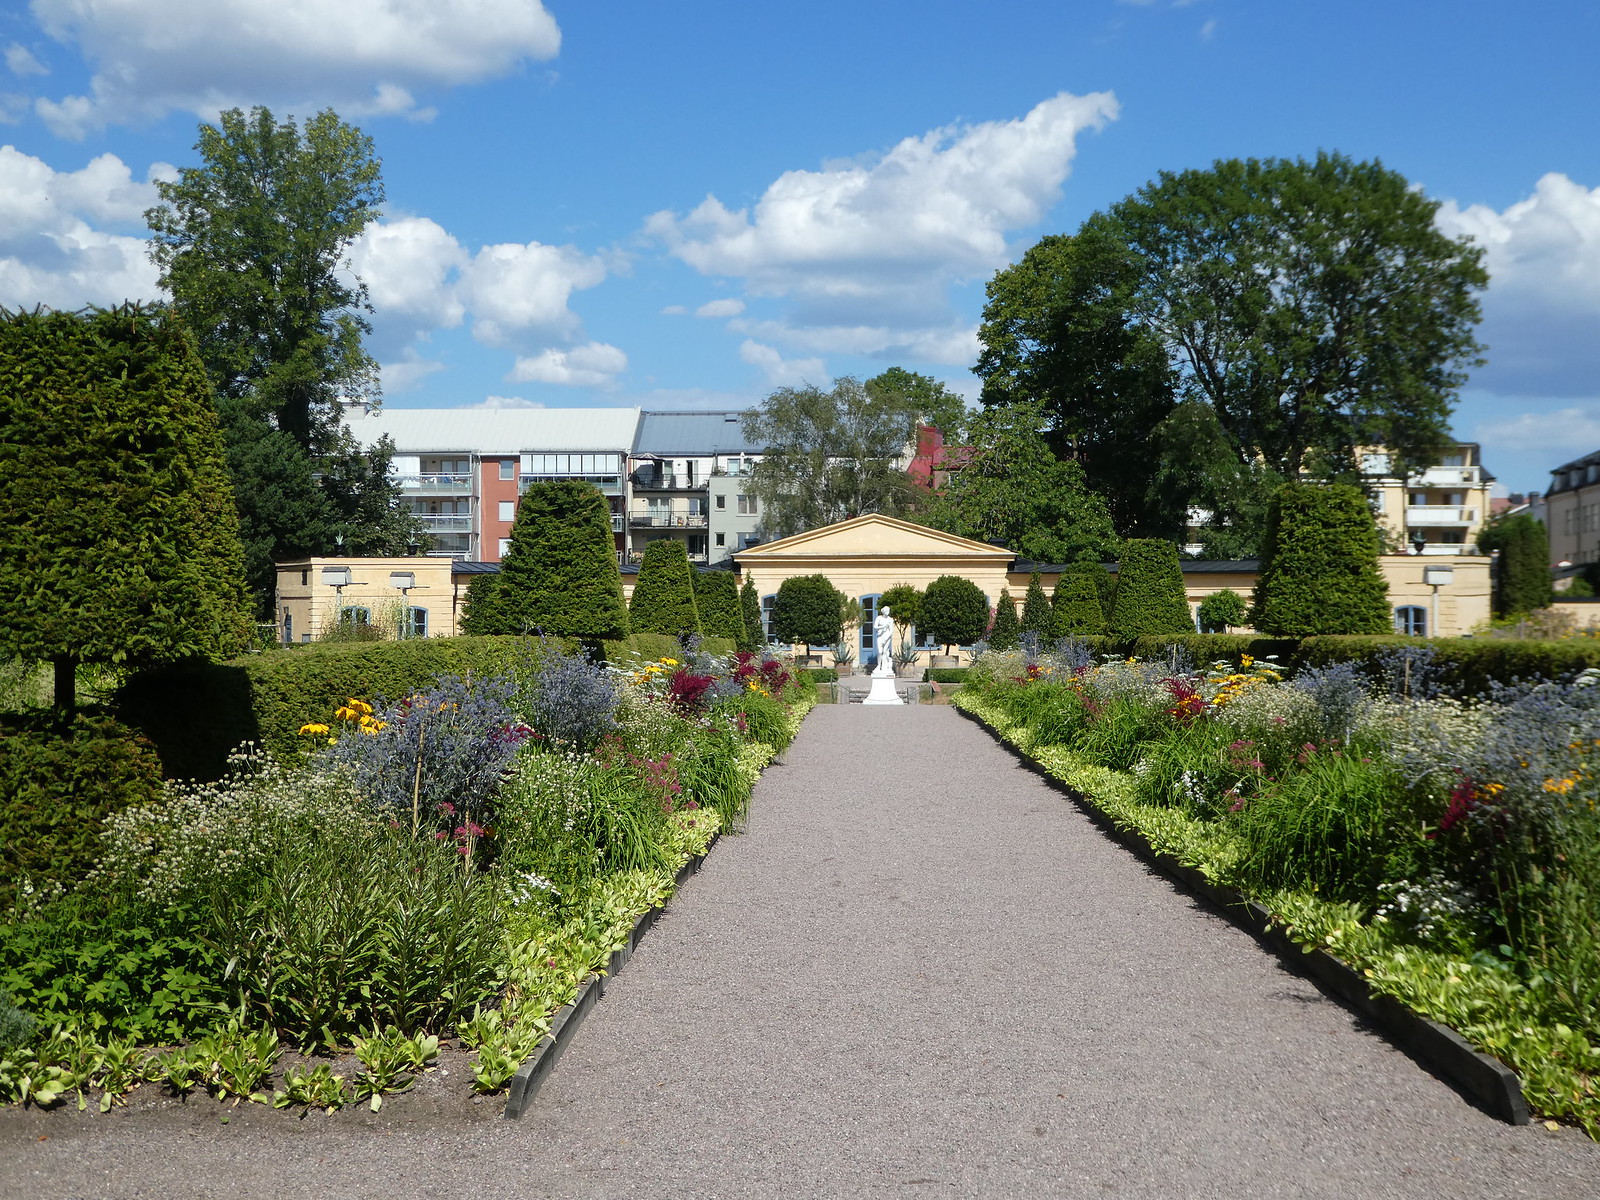 Linnaeus Garden, Uppsala